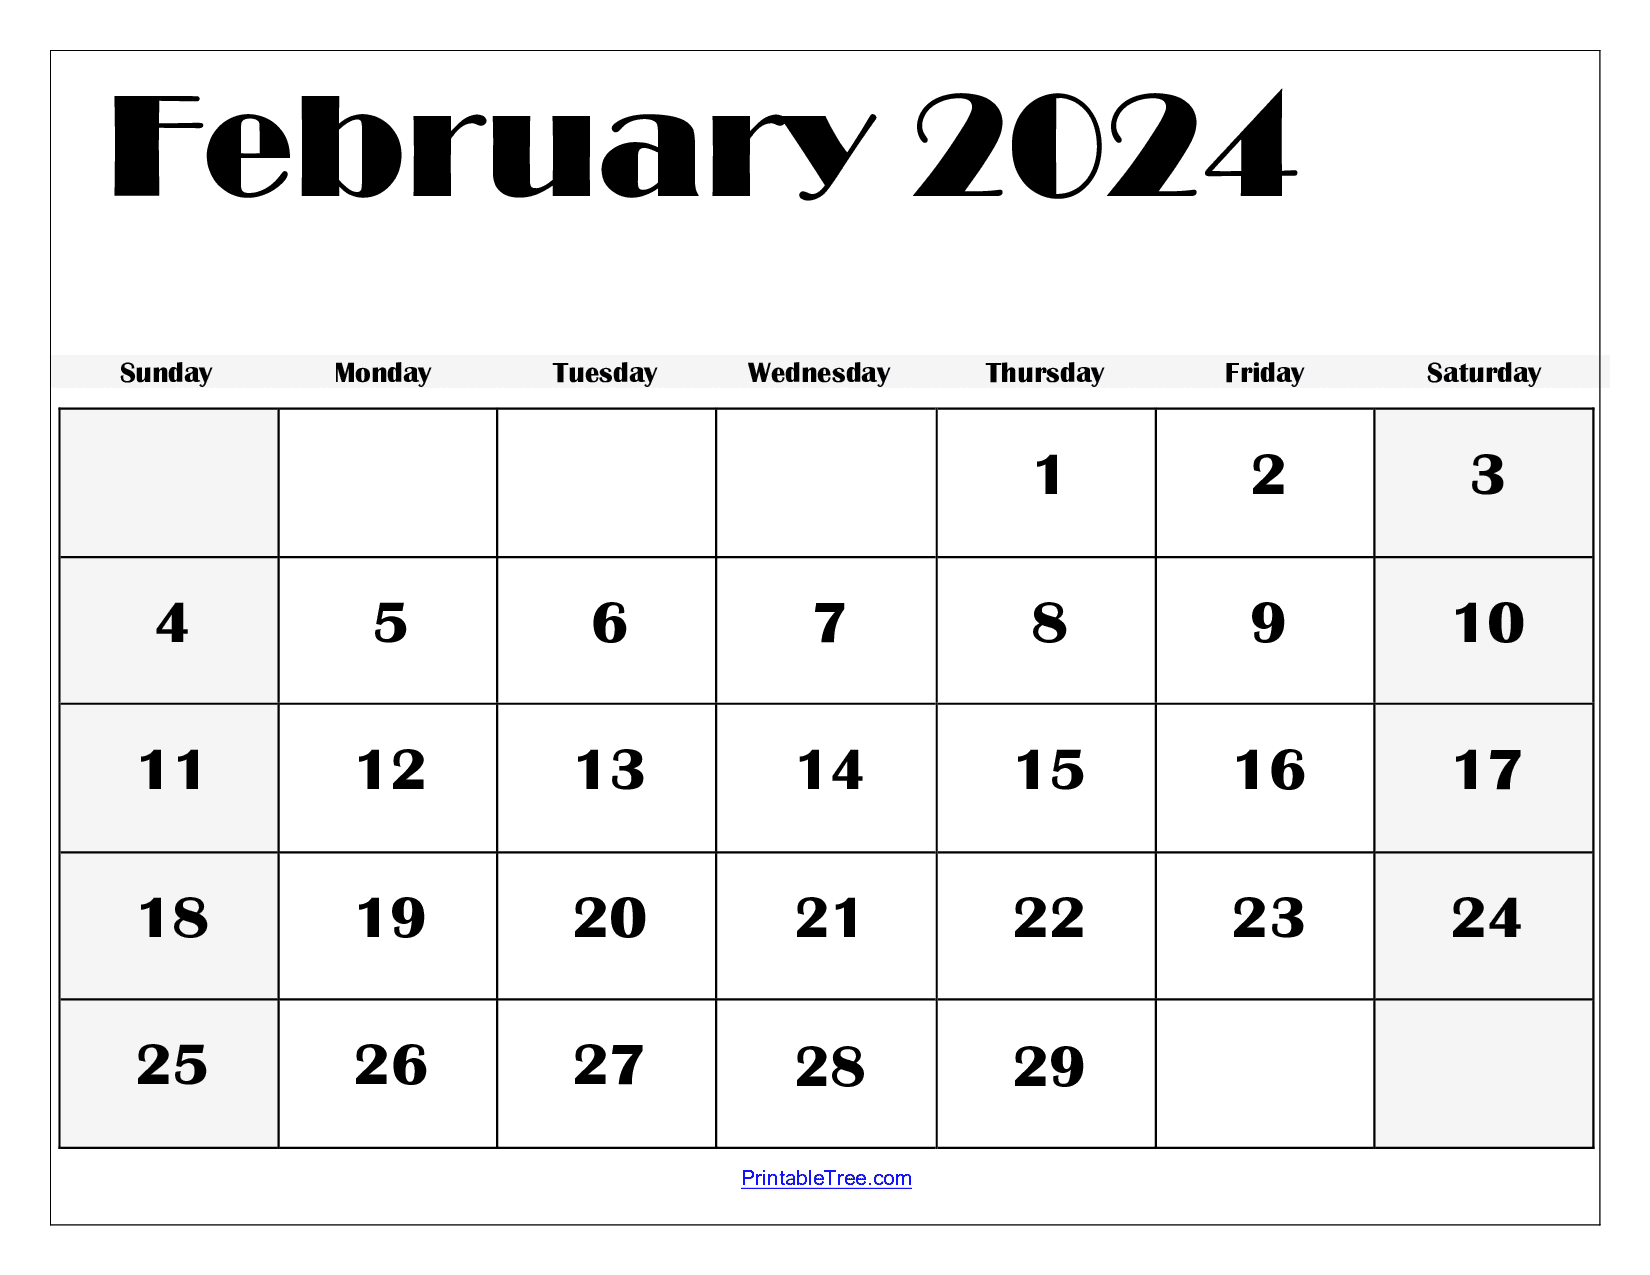 February 2024 Calendar Printable Pdf Template With Holidays for Calendar Feb 2024 Printable Free